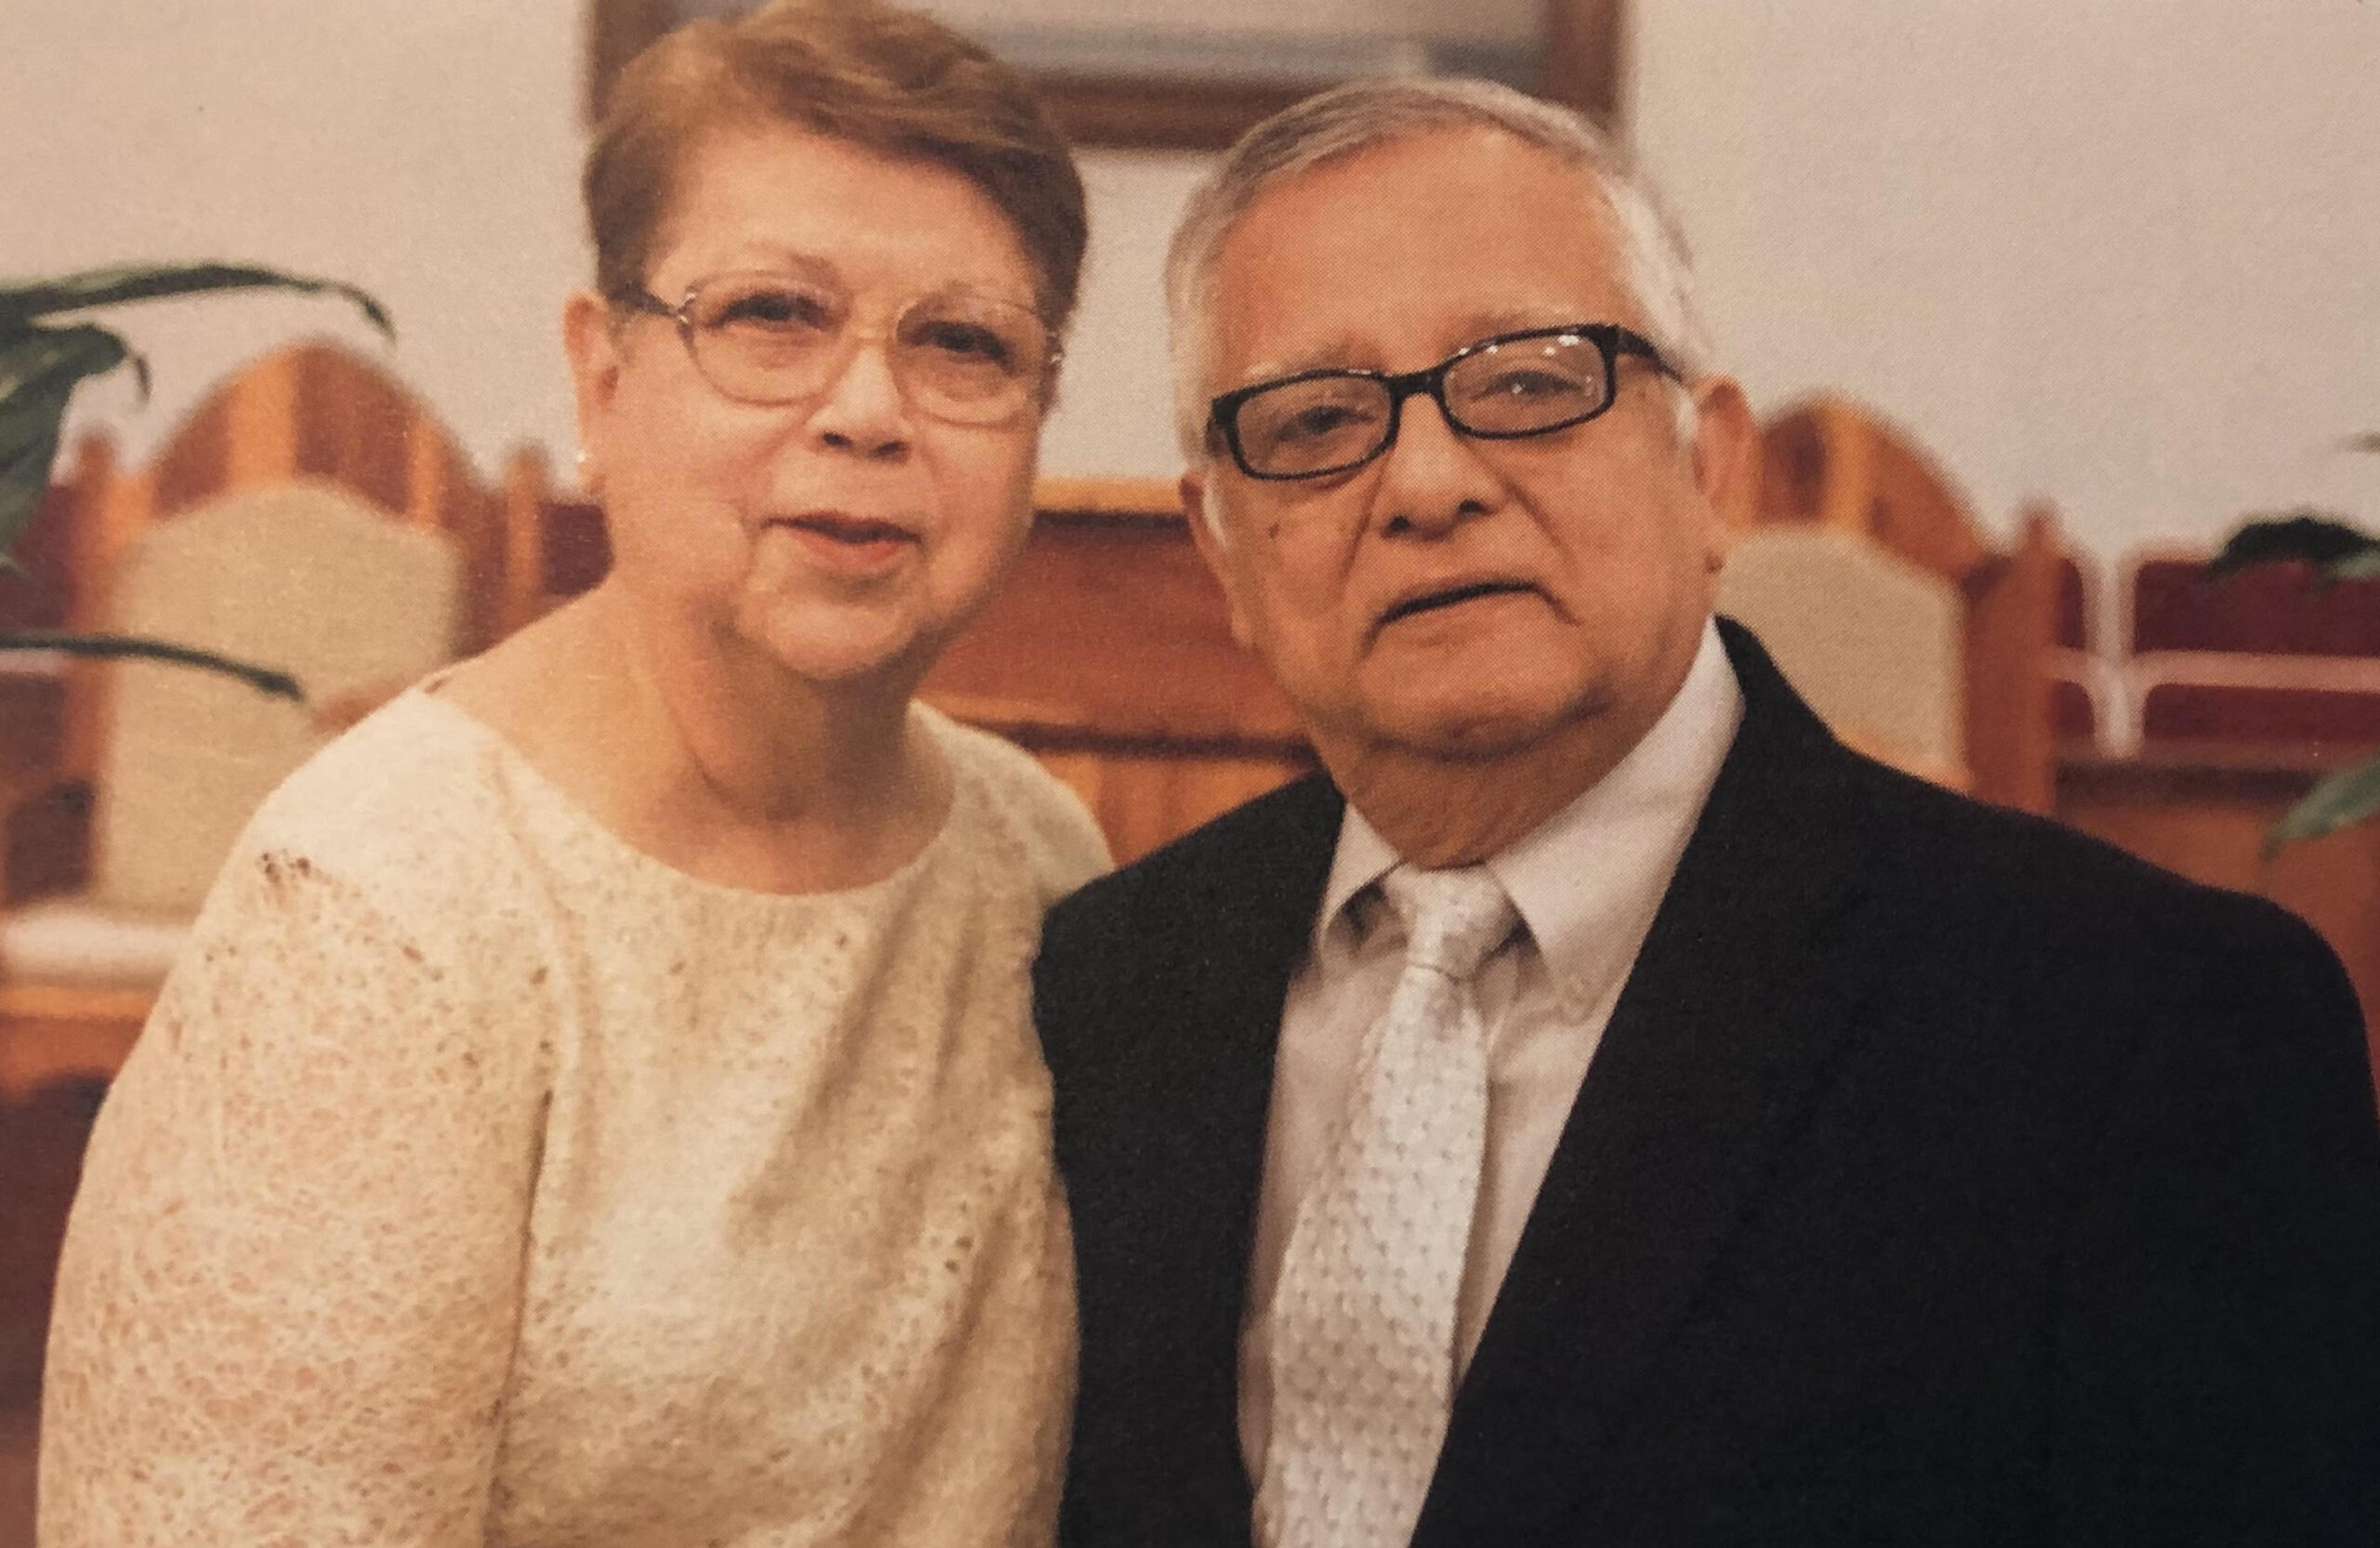 Celebration of life service for Rev. and Mrs. Hernandez set for October 16 in Hermitage